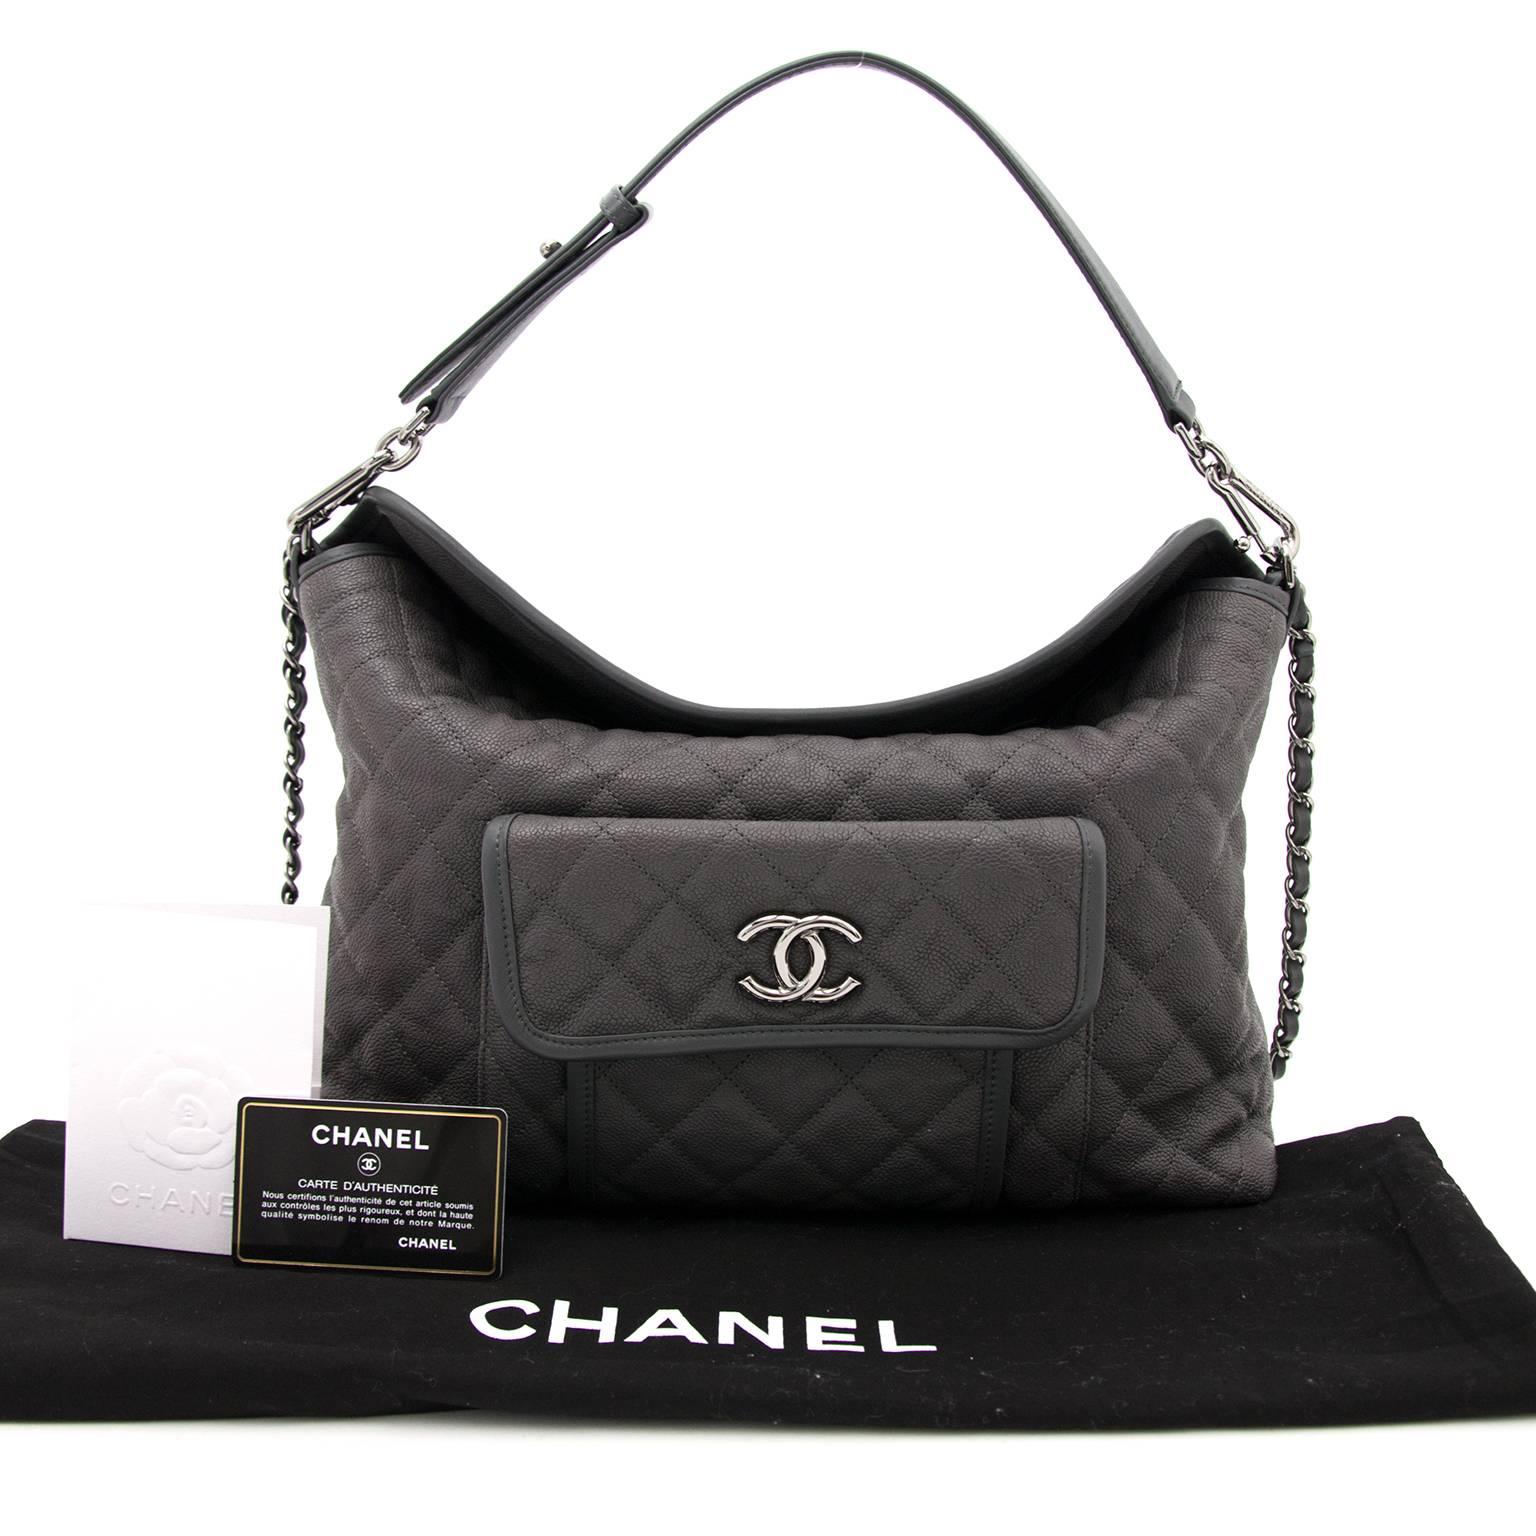 Black Chanel Grey Leather Hobo Bag